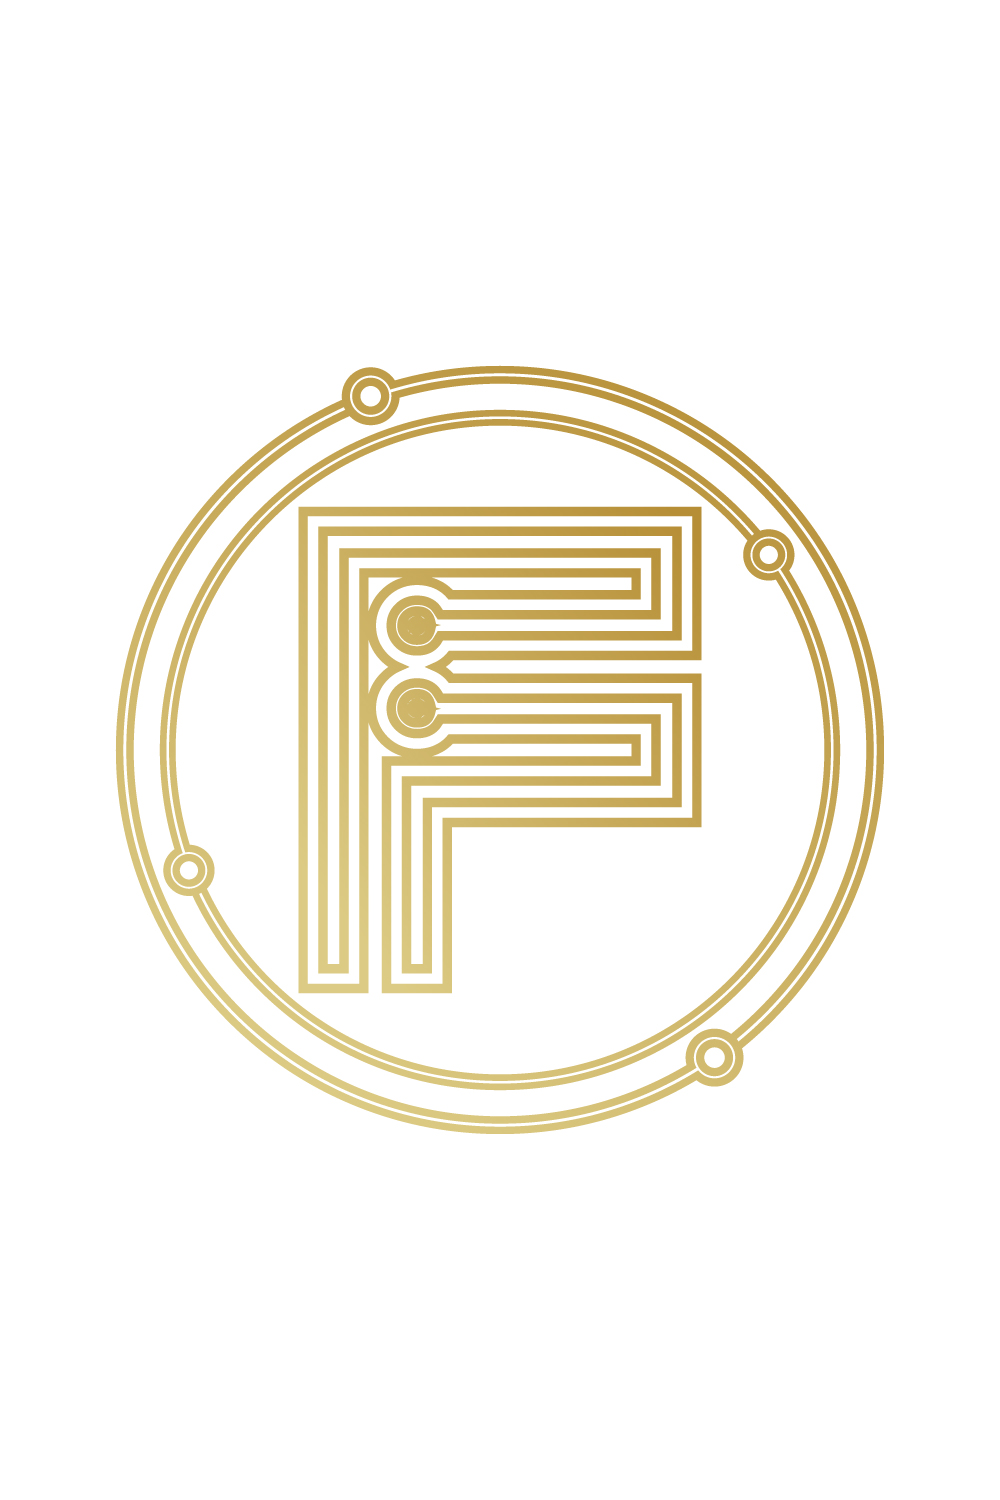 Initials F letters logo design vector images F technology logo design F logo golden color circle icon design pinterest preview image.